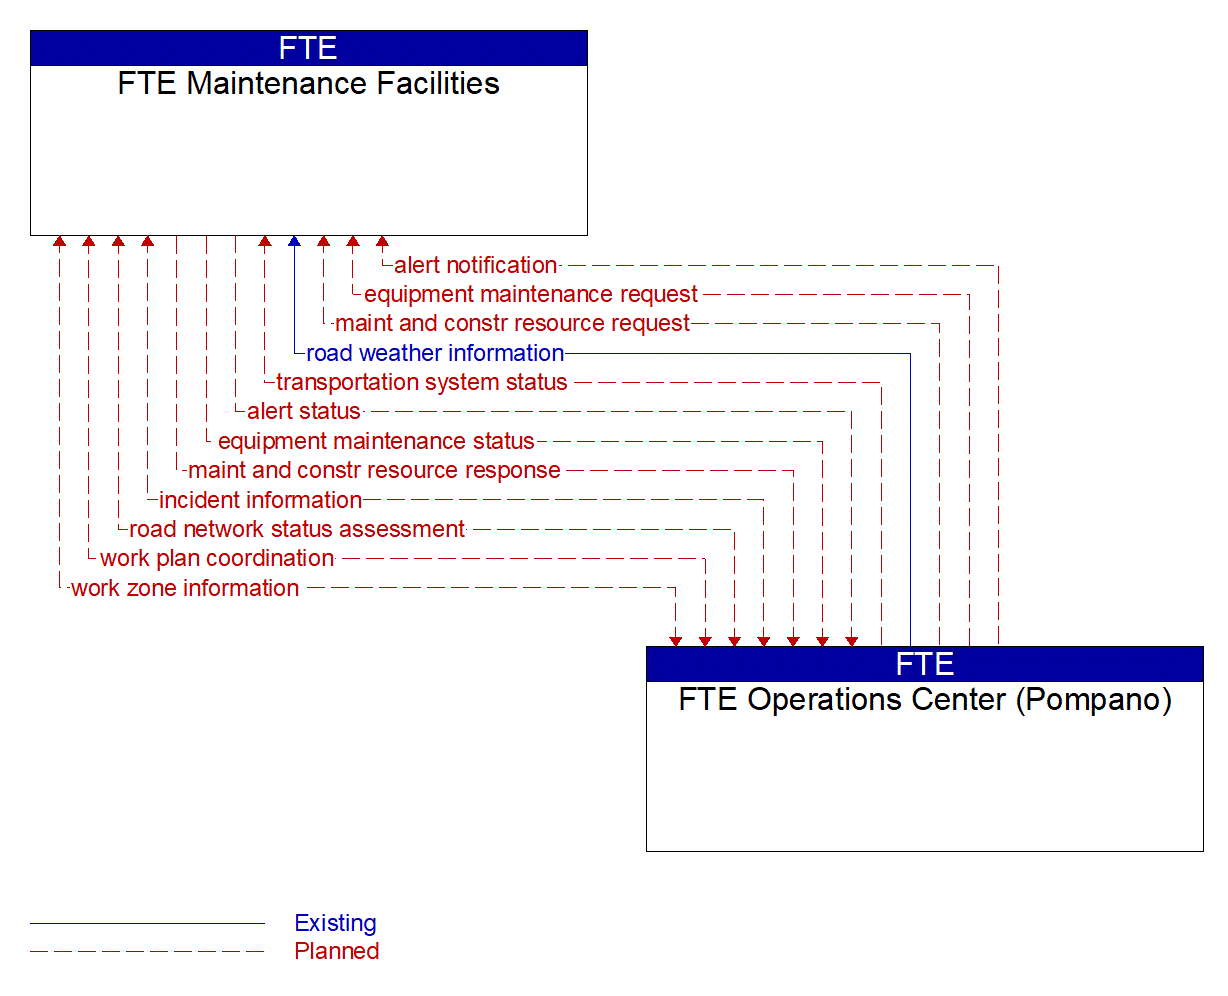 Architecture Flow Diagram: FTE Operations Center (Pompano) <--> FTE Maintenance Facilities